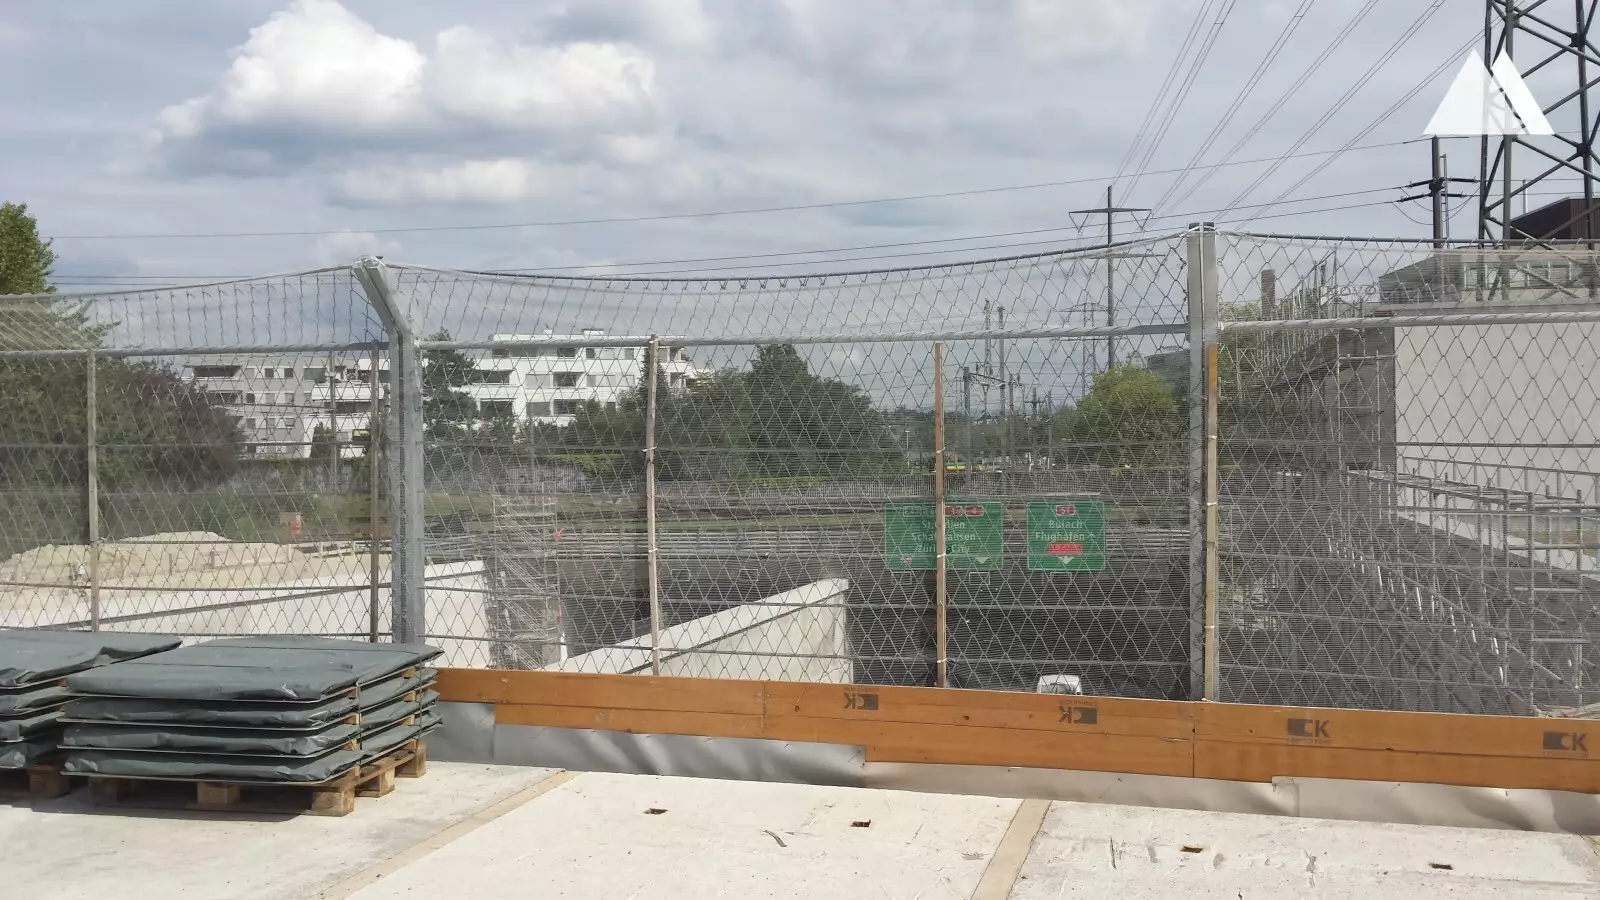 Mobilne ogrodzenia drogowe - Stelzentunnel Construction Site Protection 2016